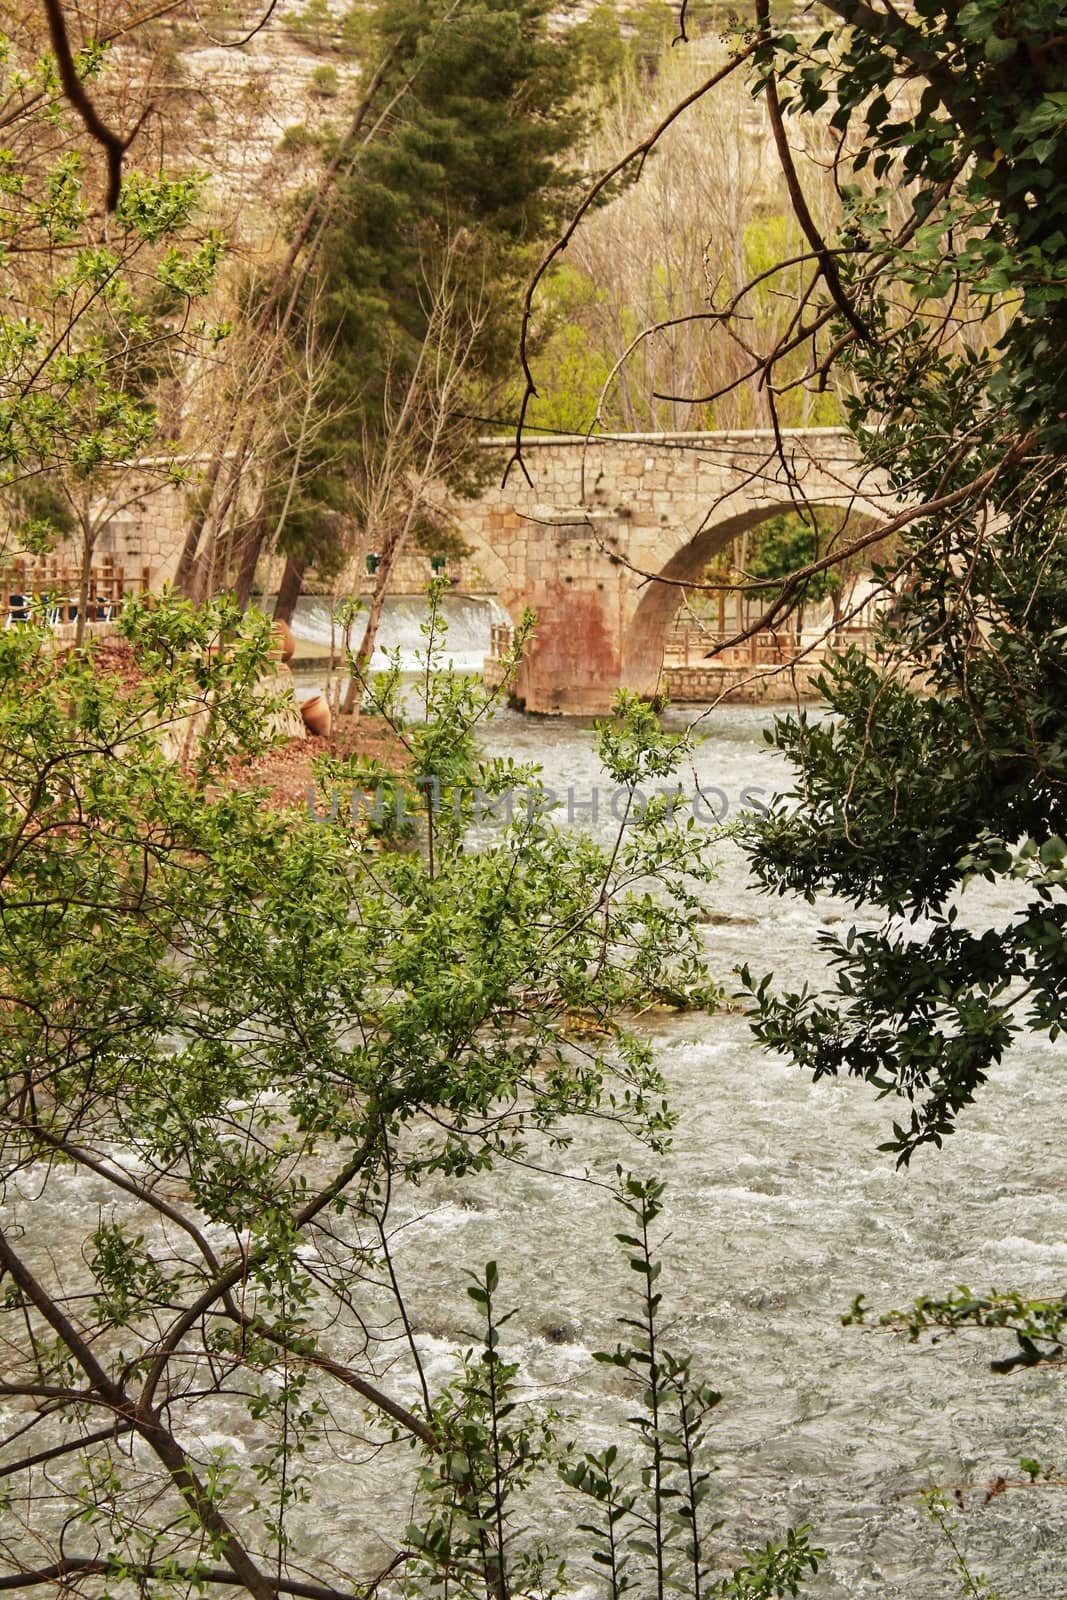 Stone bridge and the Jucar River in Alcala del Jucar village by soniabonet